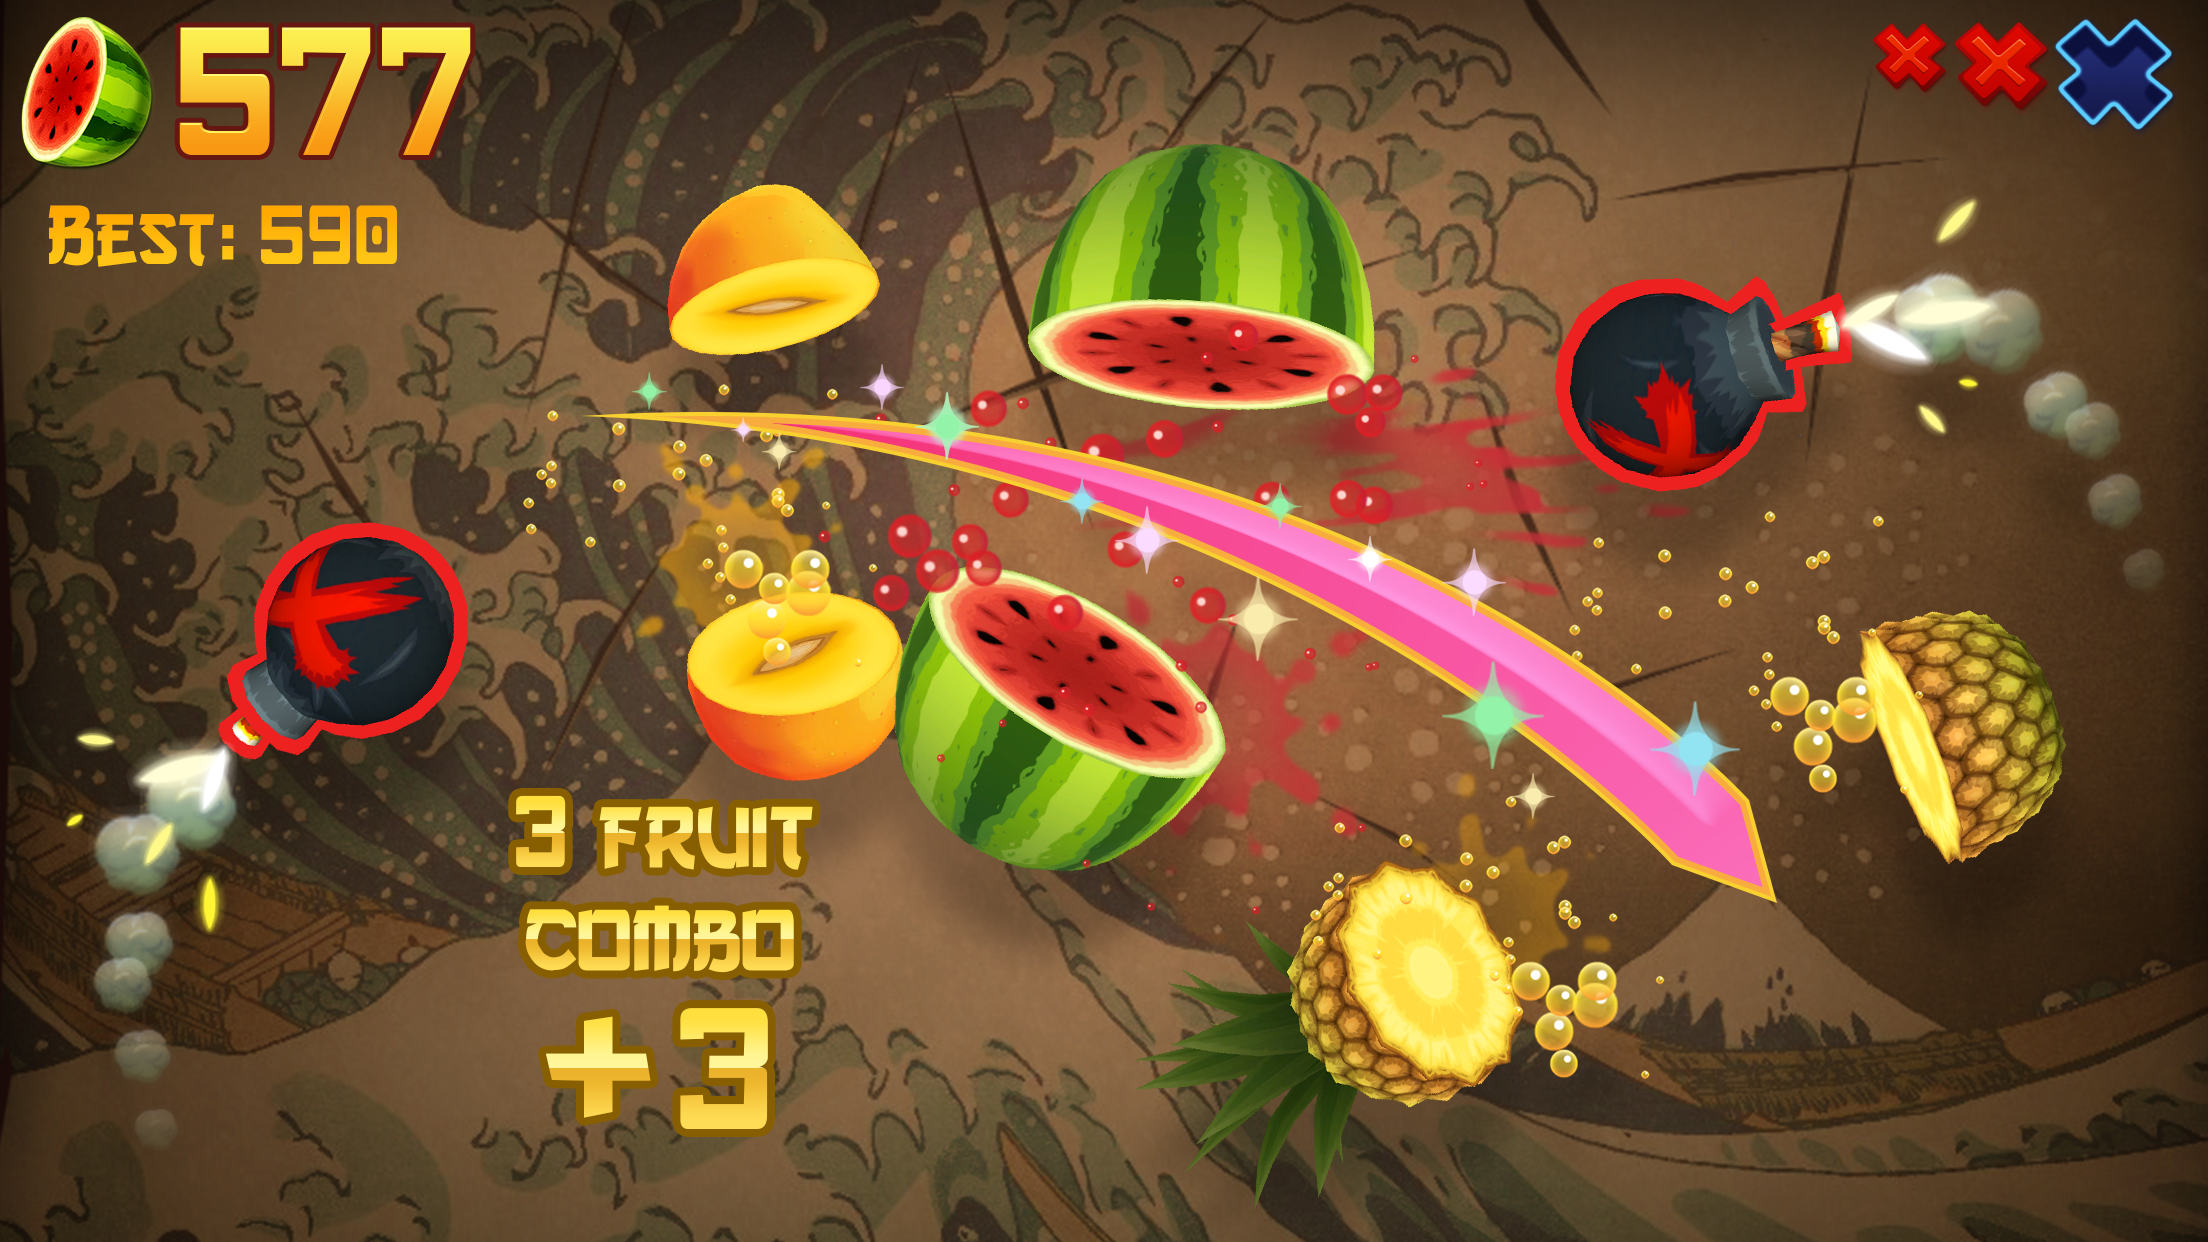 Screenshot 1 of Ninja trái cây cổ điển+ 